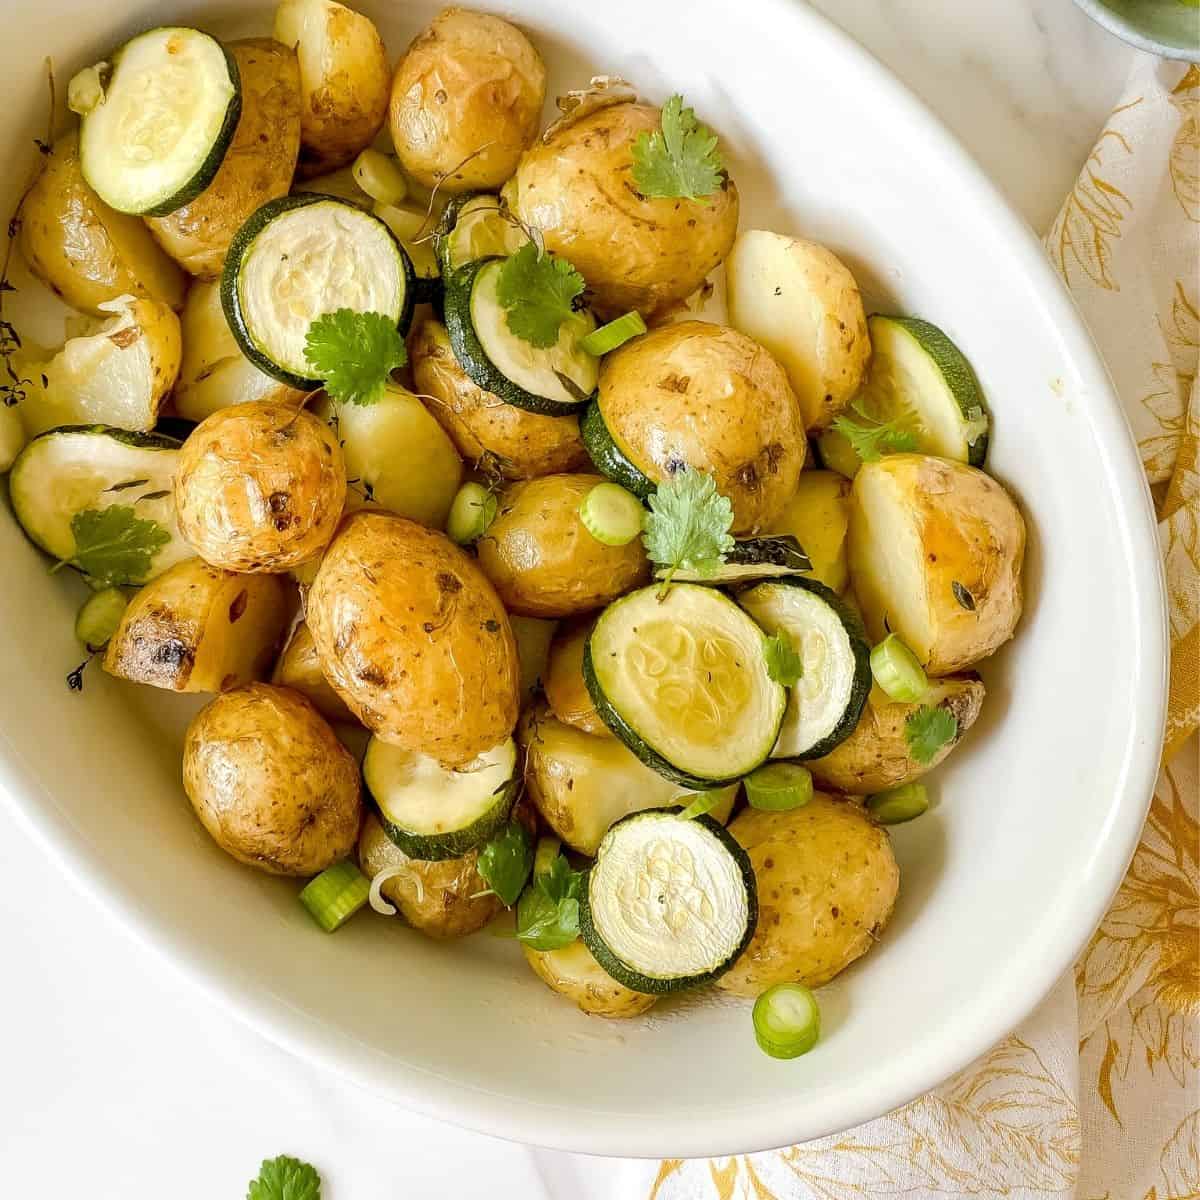 Roasted zucchini and potatoes